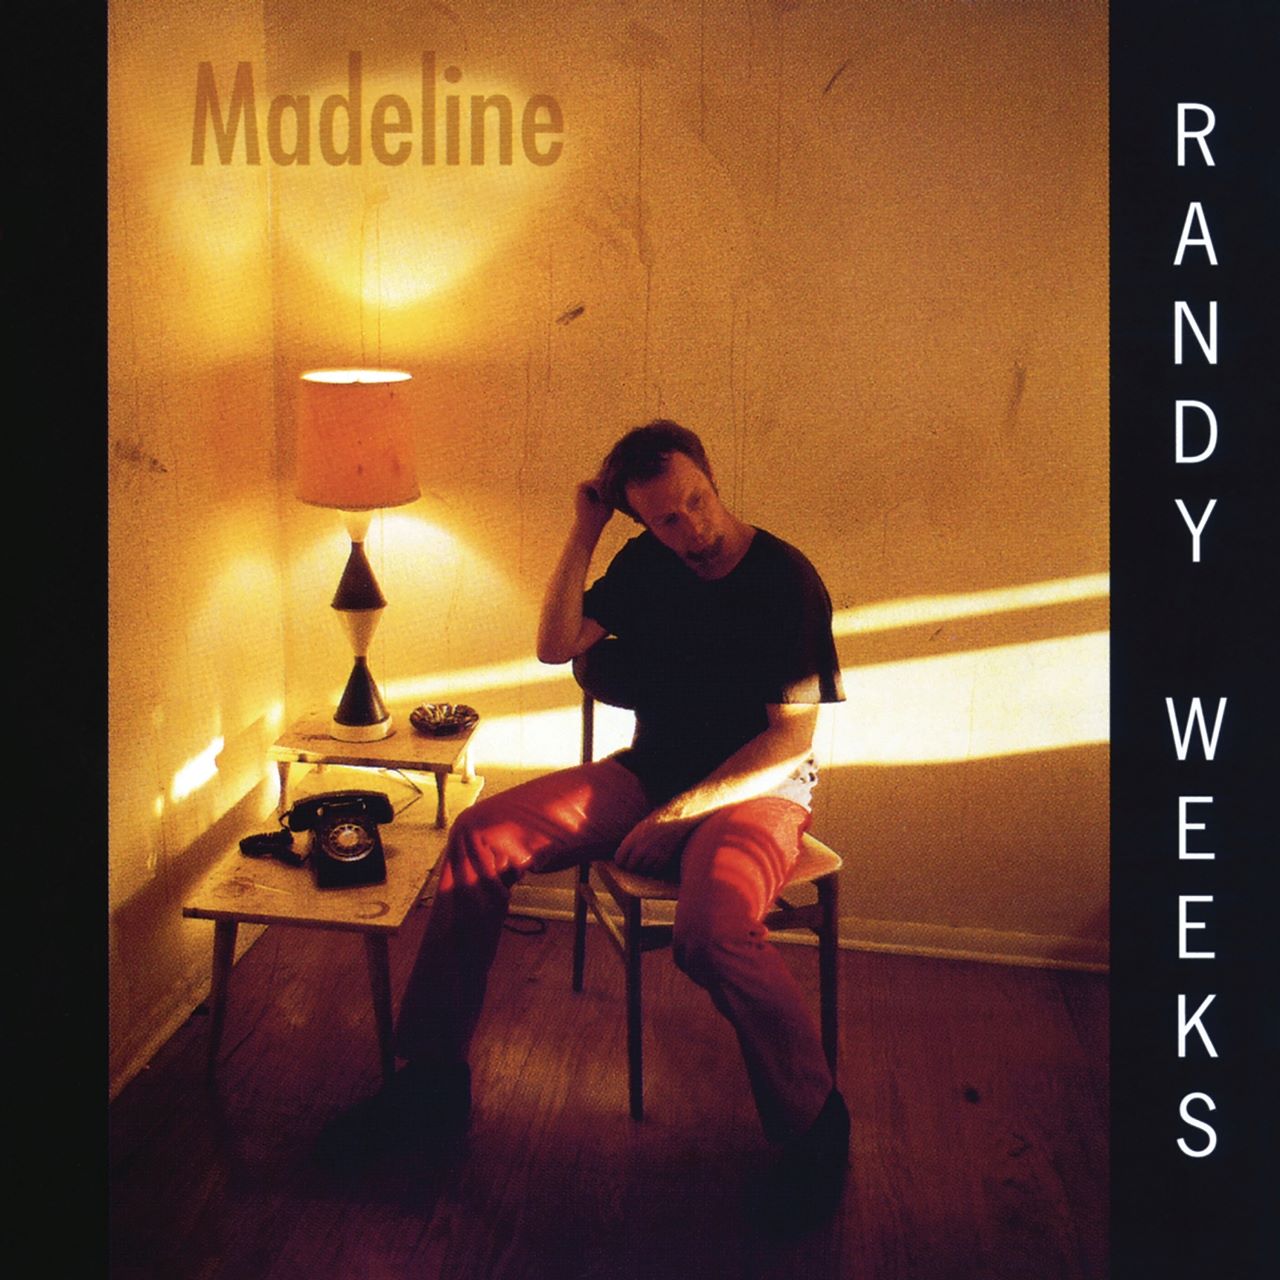 Randy Weeks - Madeline cover album